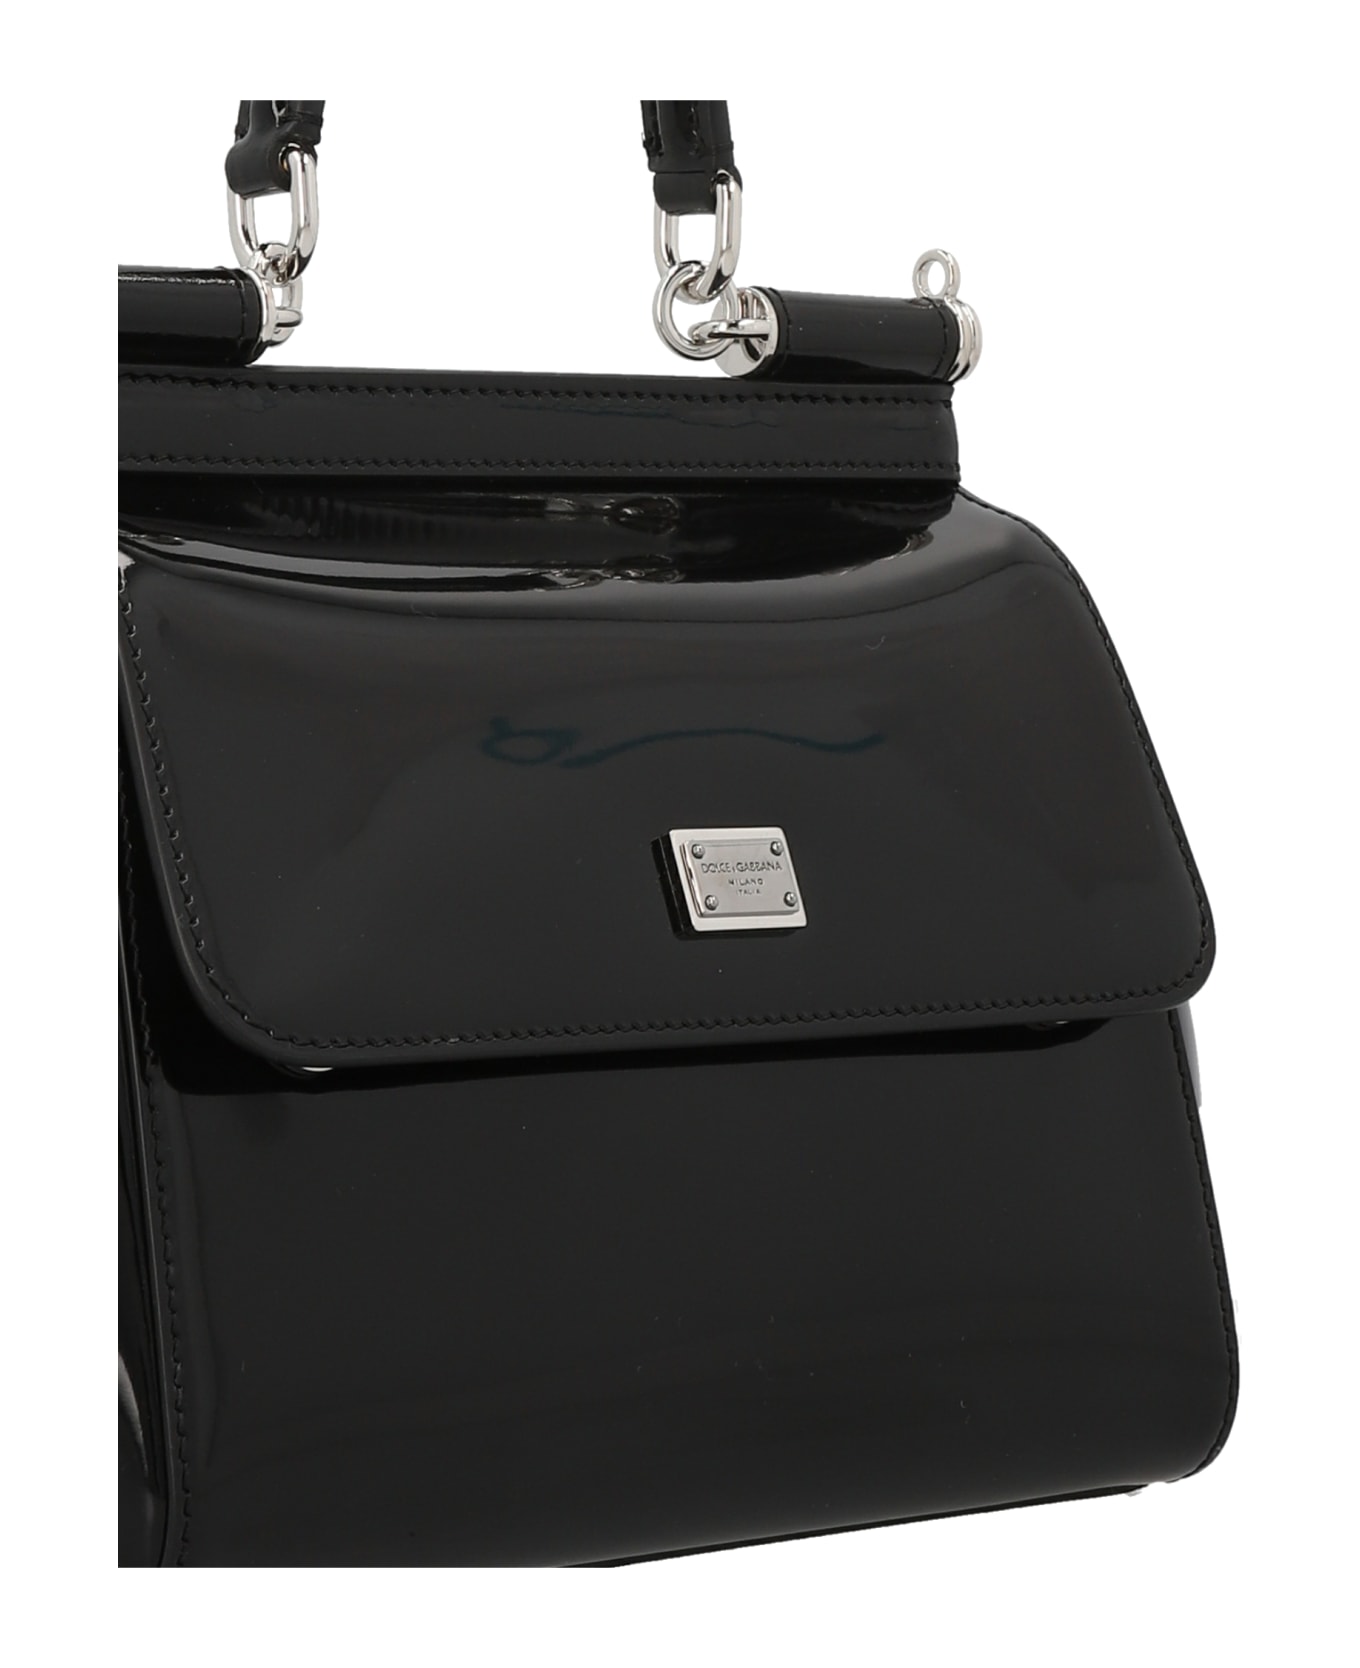 Dolce & Gabbana Logo Leather Handbag - Black  